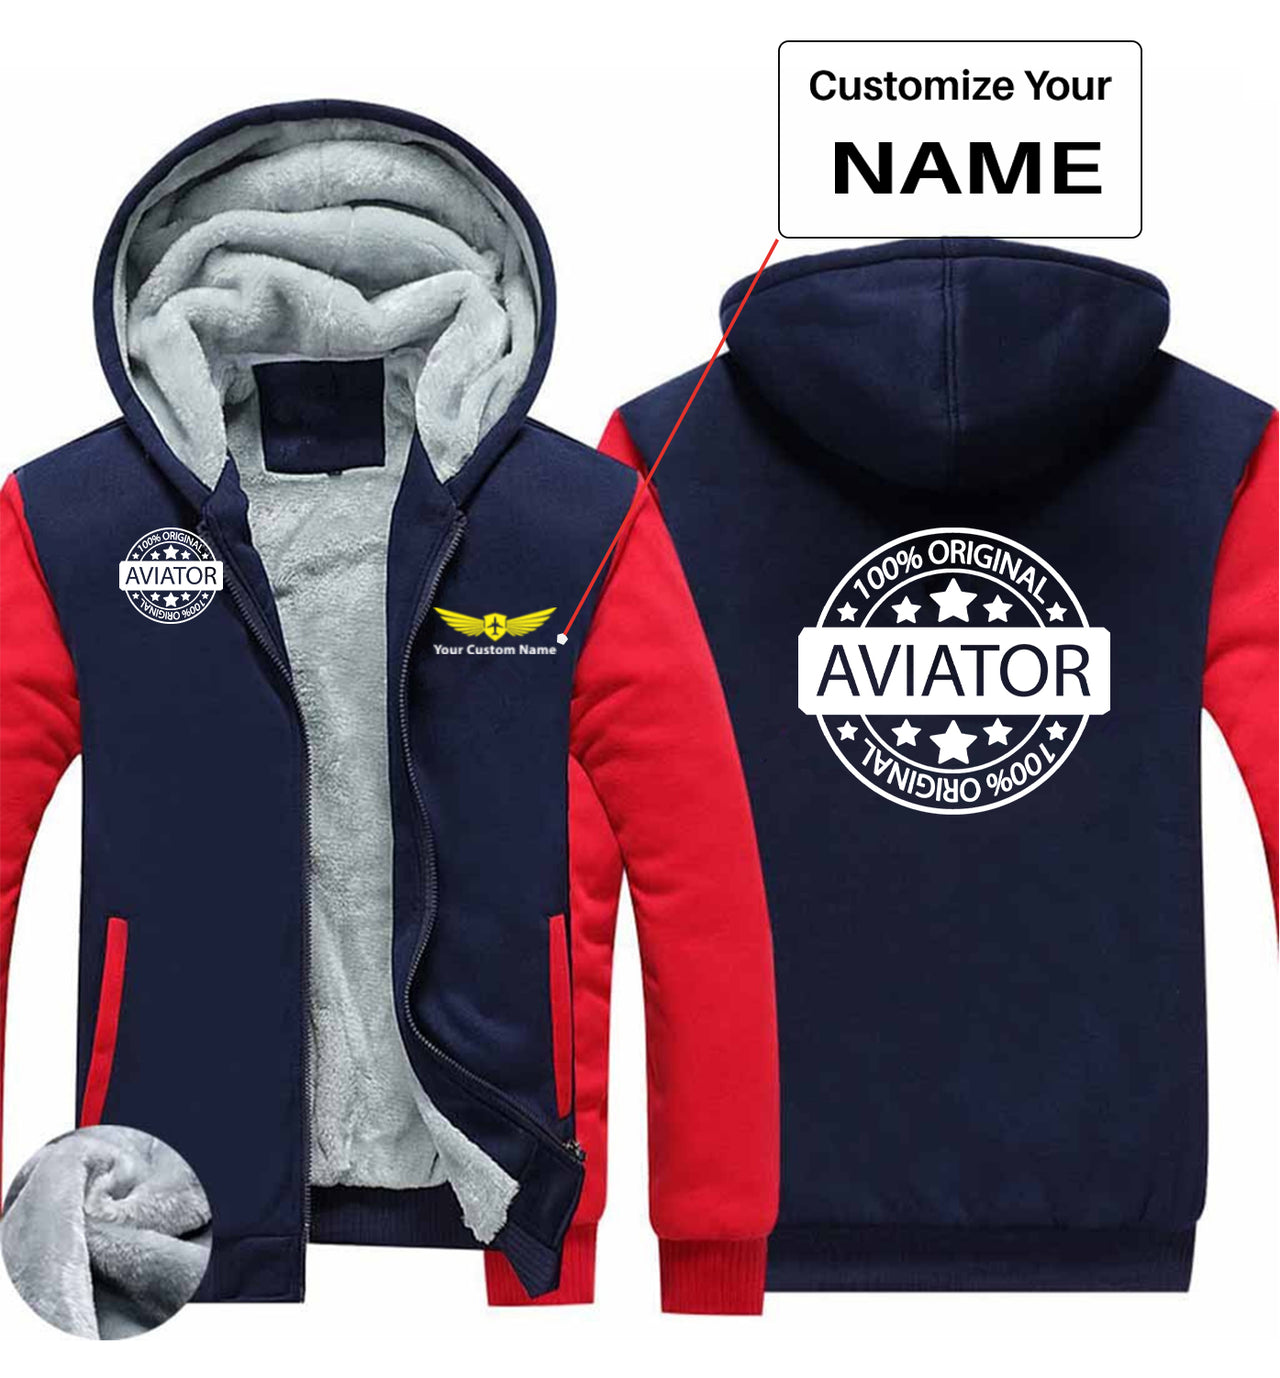 %100 Original Aviator Designed Zipped Sweatshirts